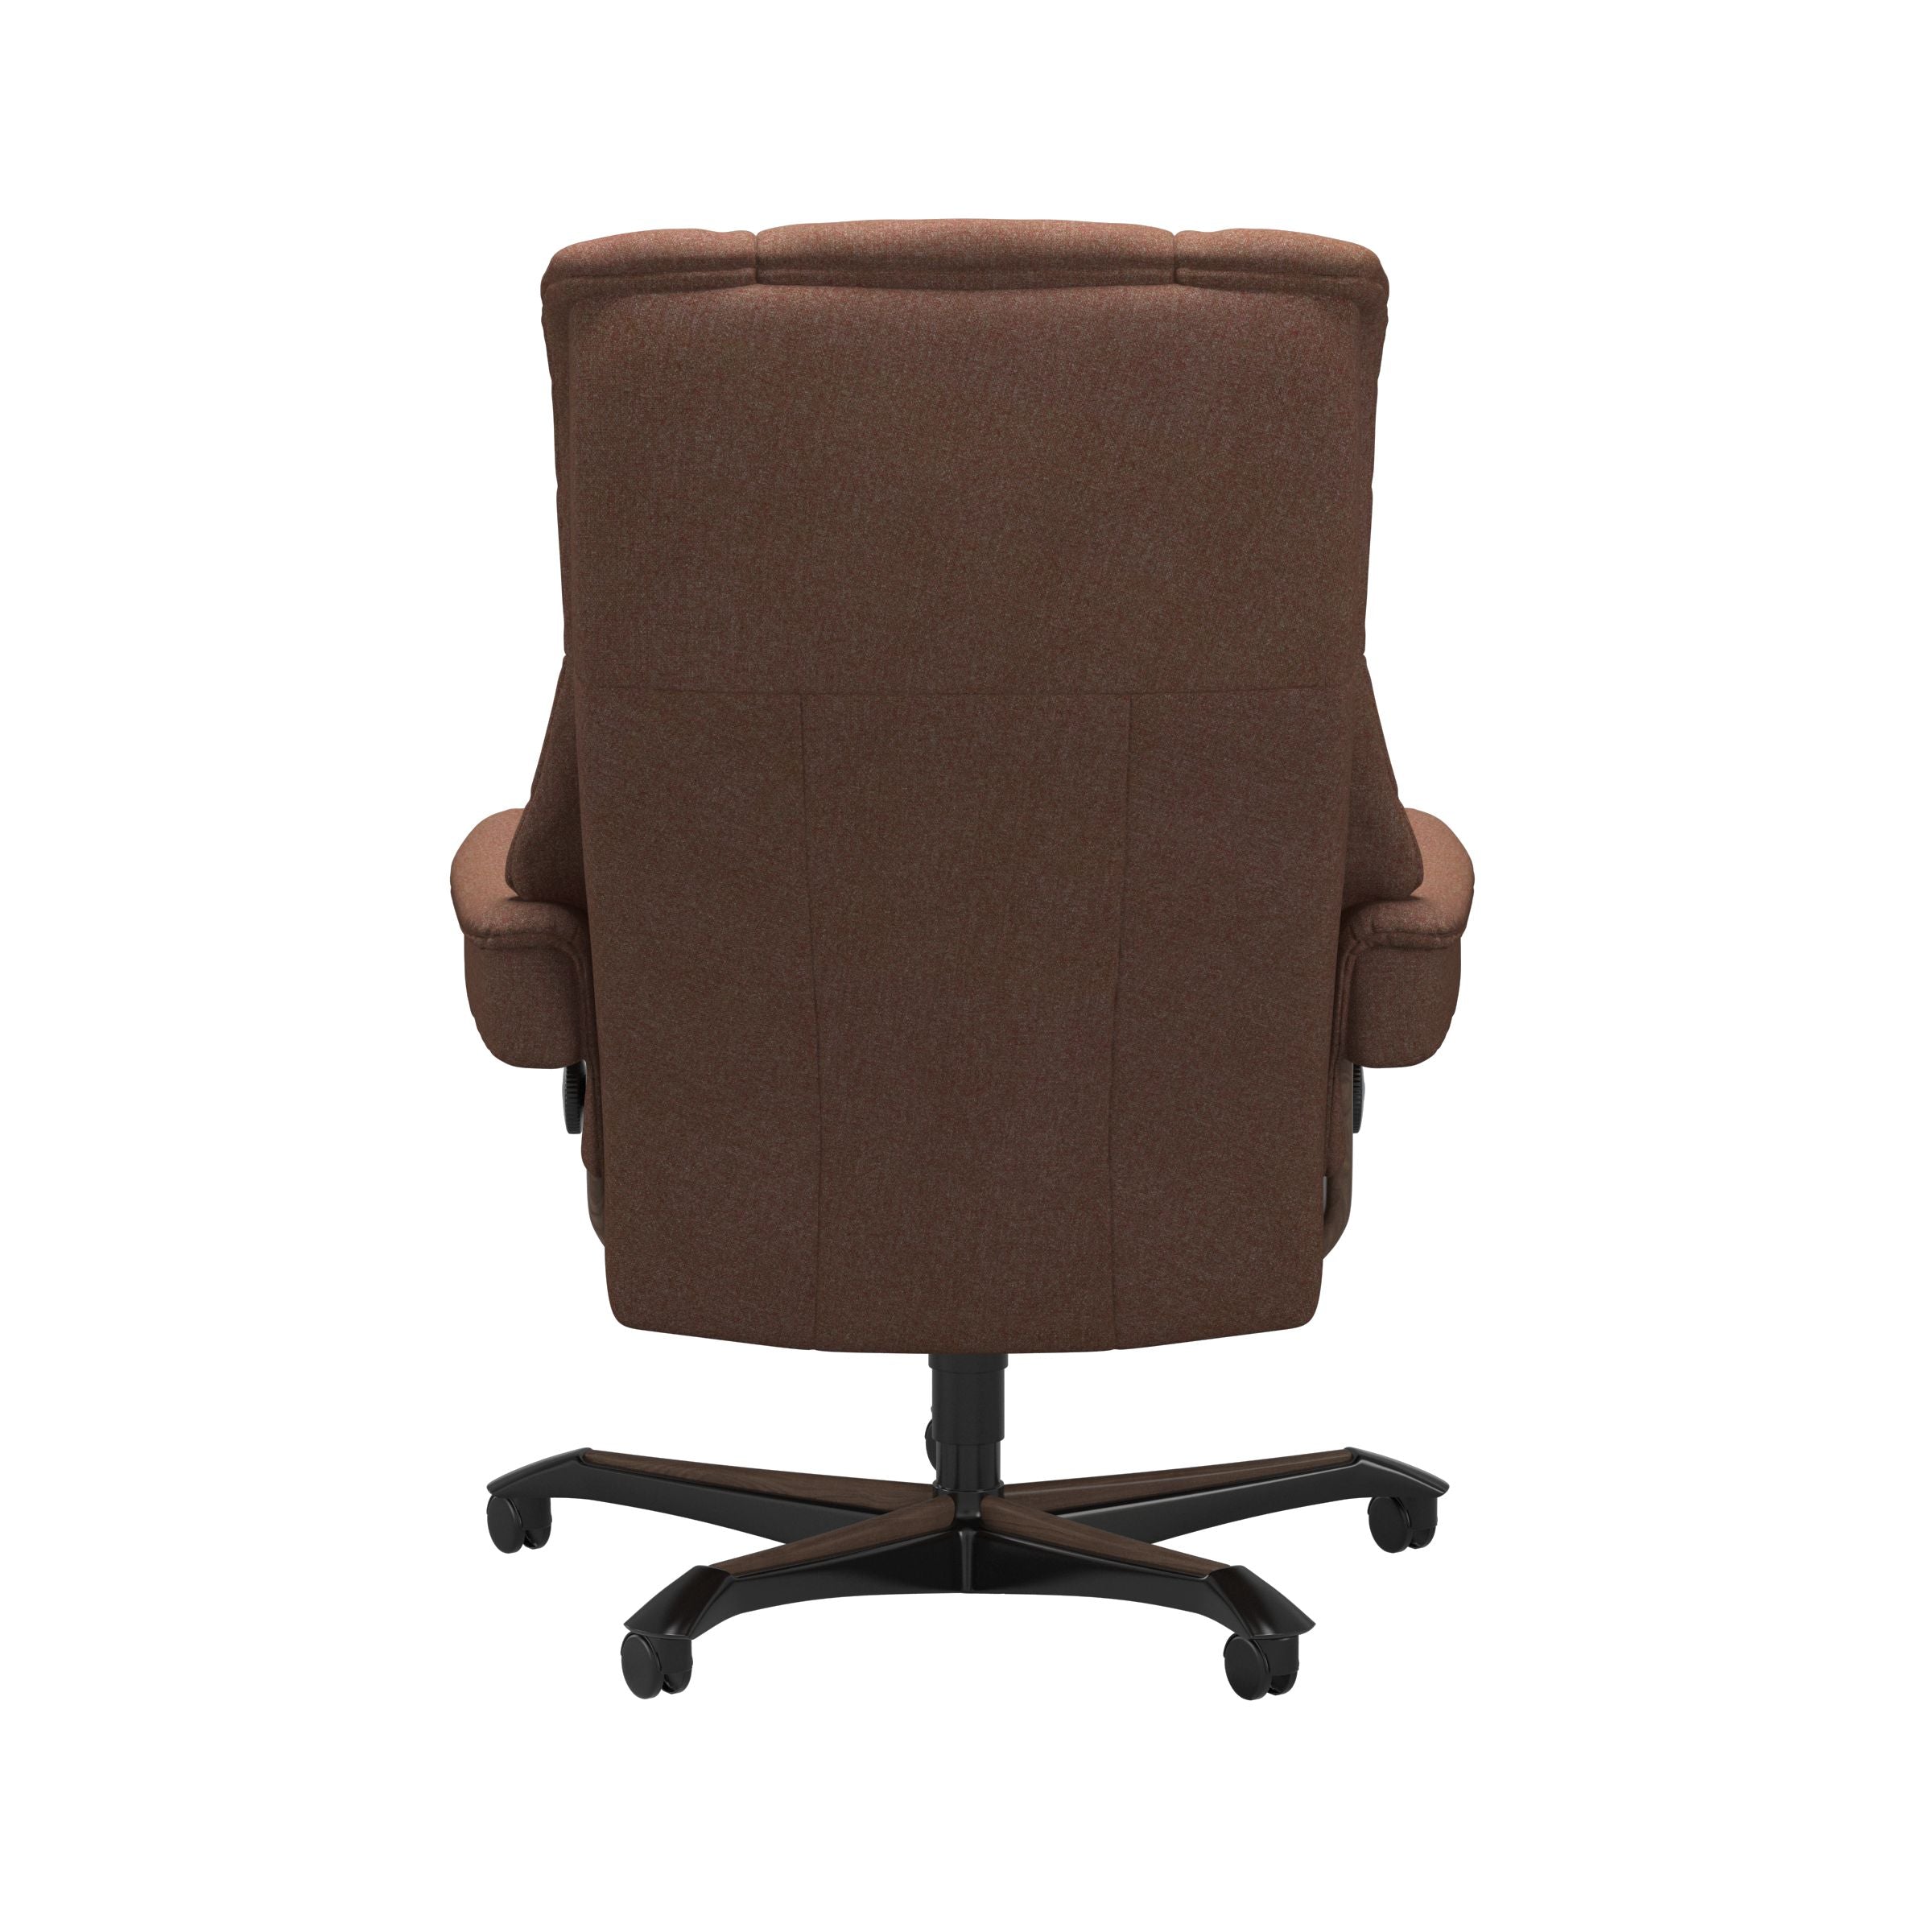 Stressless Mayfair Fabric Office Chair